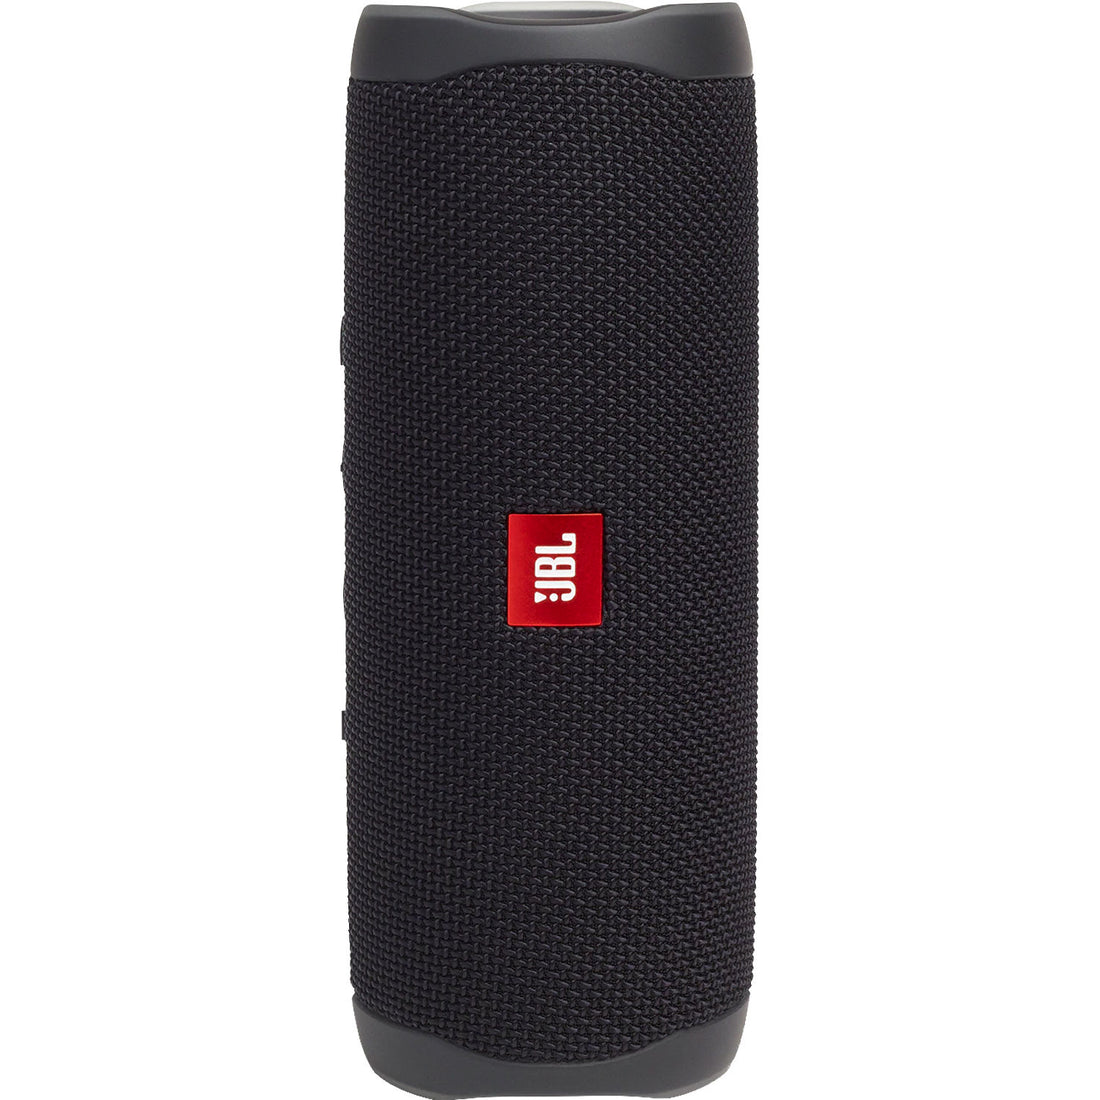 JBL Flip 5 Waterproof Wireless Portable Bluetooth Speaker - GG - Black (Certified Refurbished)